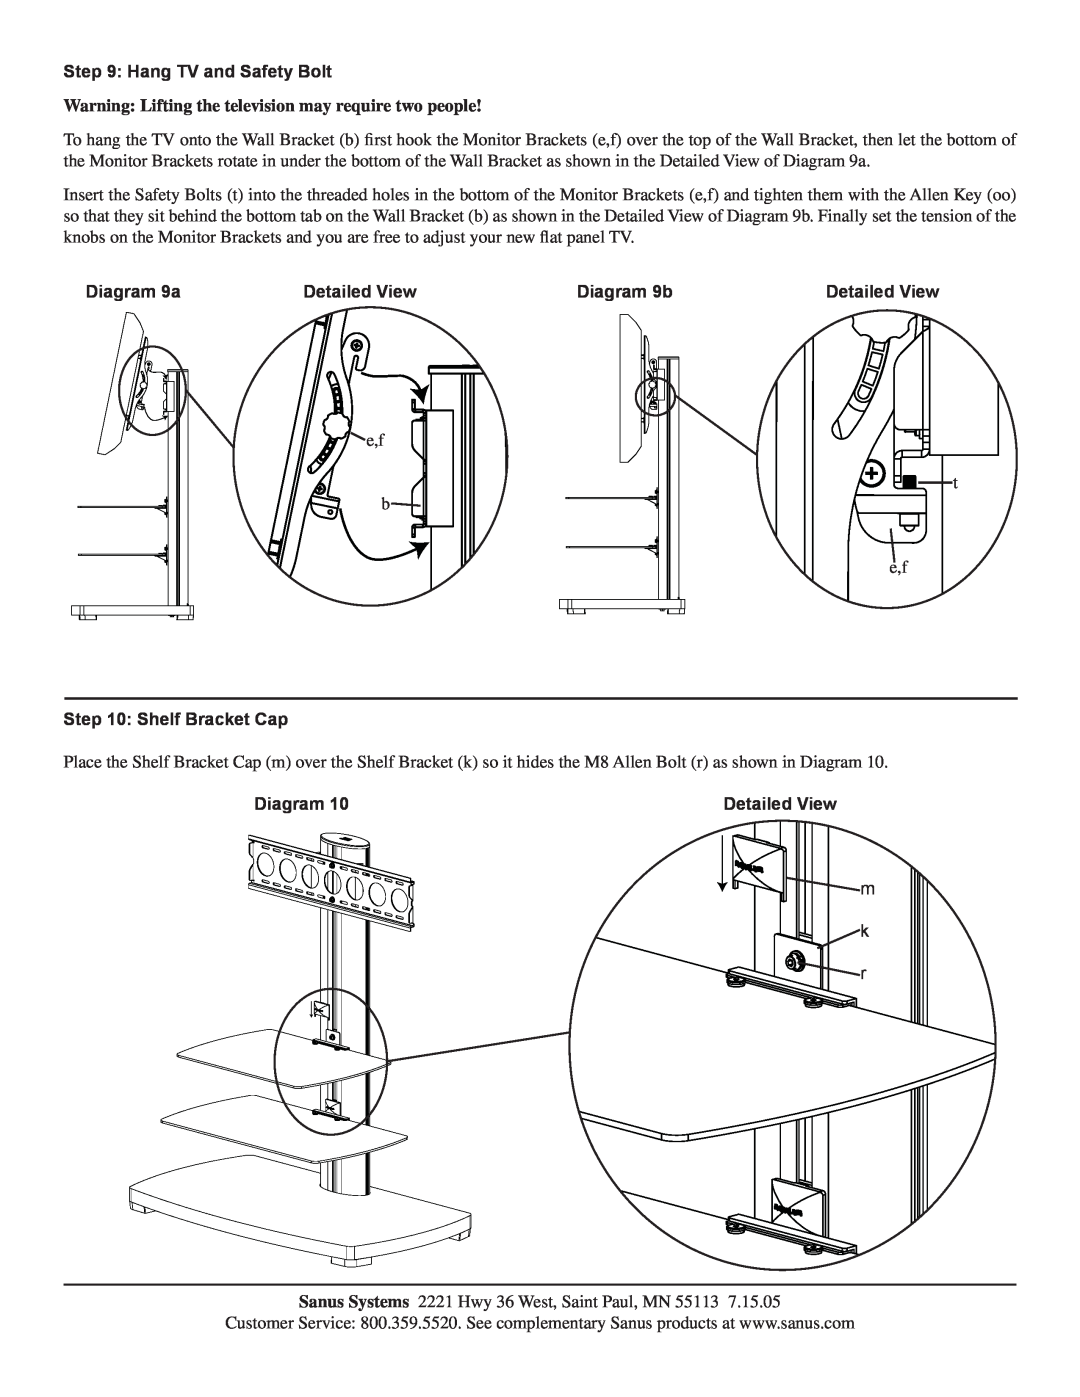 Sanus Systems PFFP2 manual Hang TV and Safety Bolt, Diagram 9a, Detailed View, Diagram 9b, Shelf Bracket Cap 